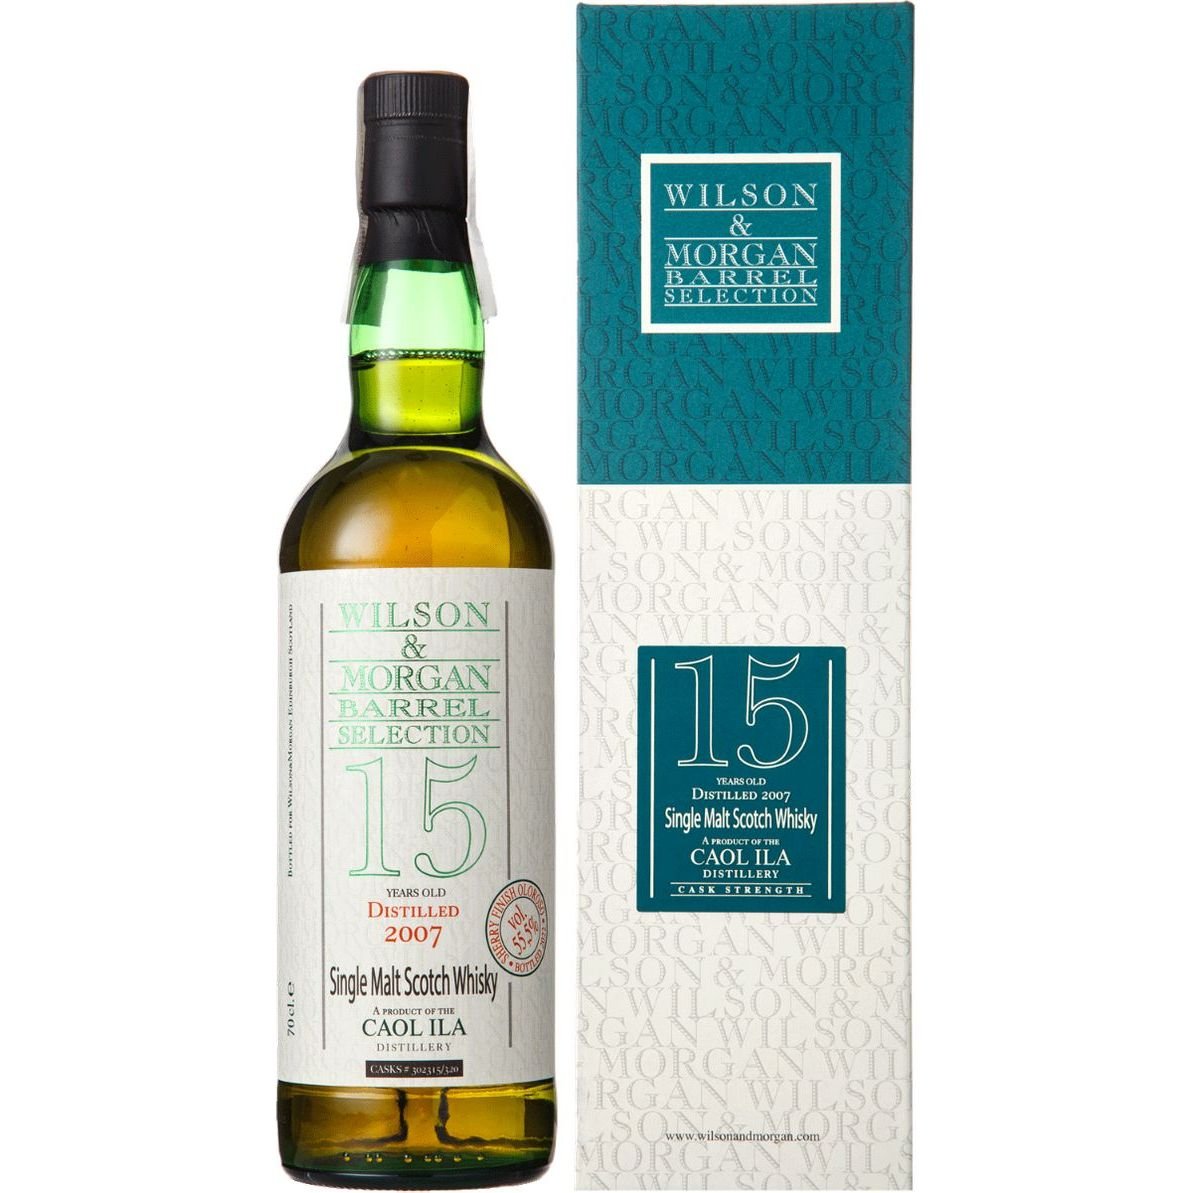 Виски Wilson & Morgan Caol Ila 15 yo Oloroso Finish Cask #302315-320 Single Malt Scotch Whisky 55.5% 0.7 л в подарочной упаковке - фото 1